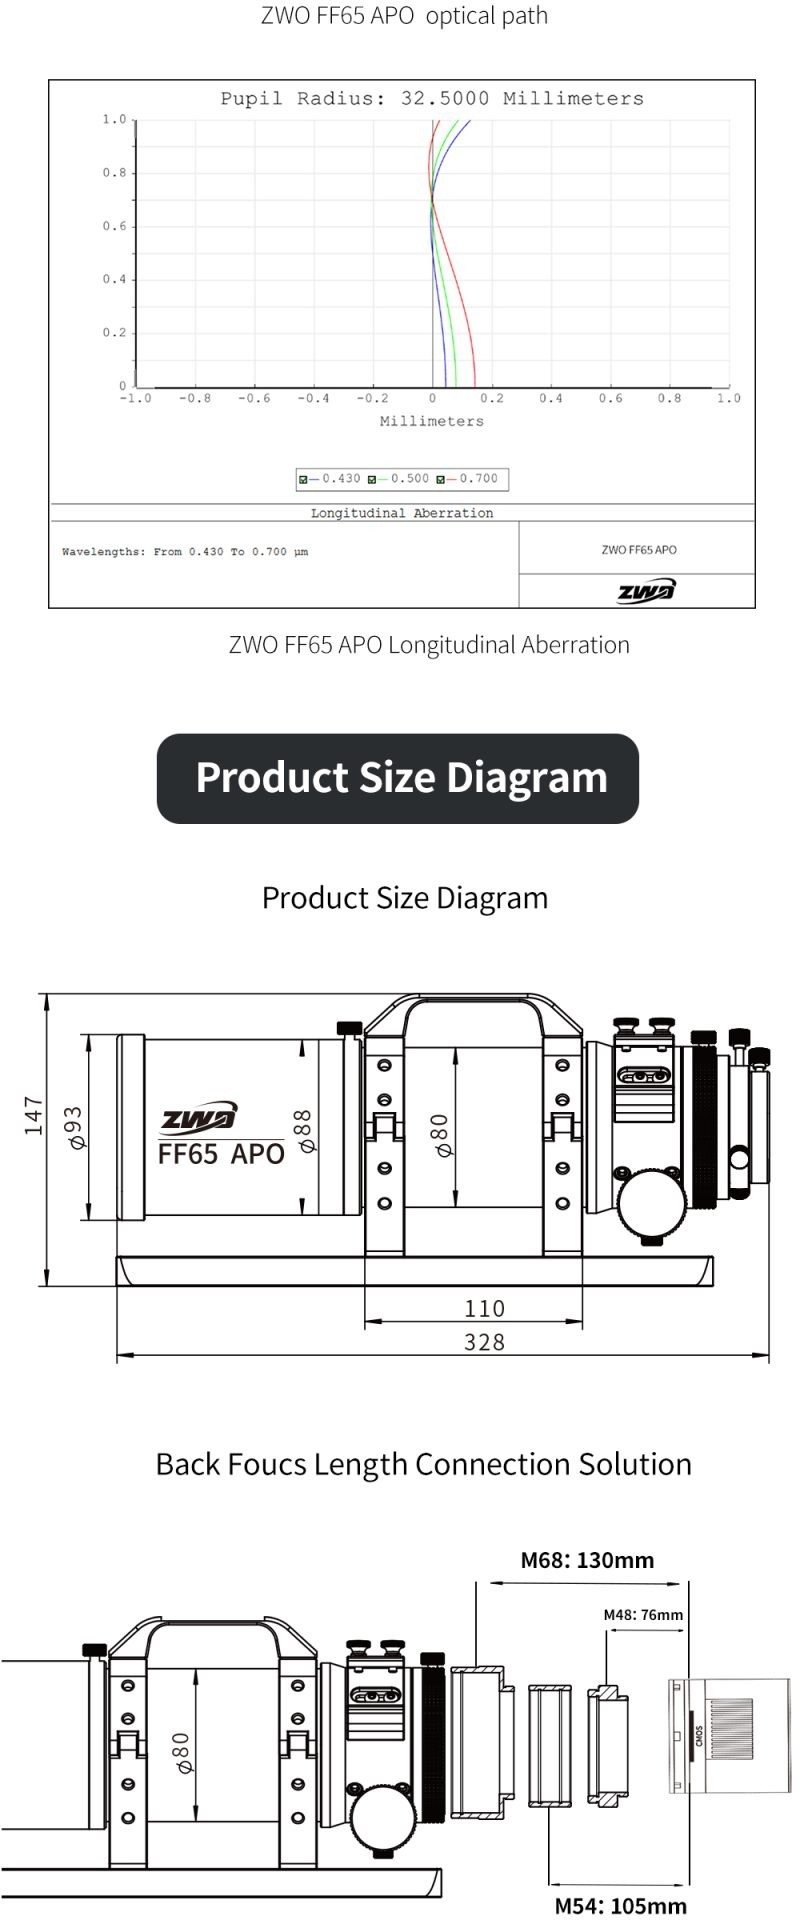 ZWO FF65 APO product diagram